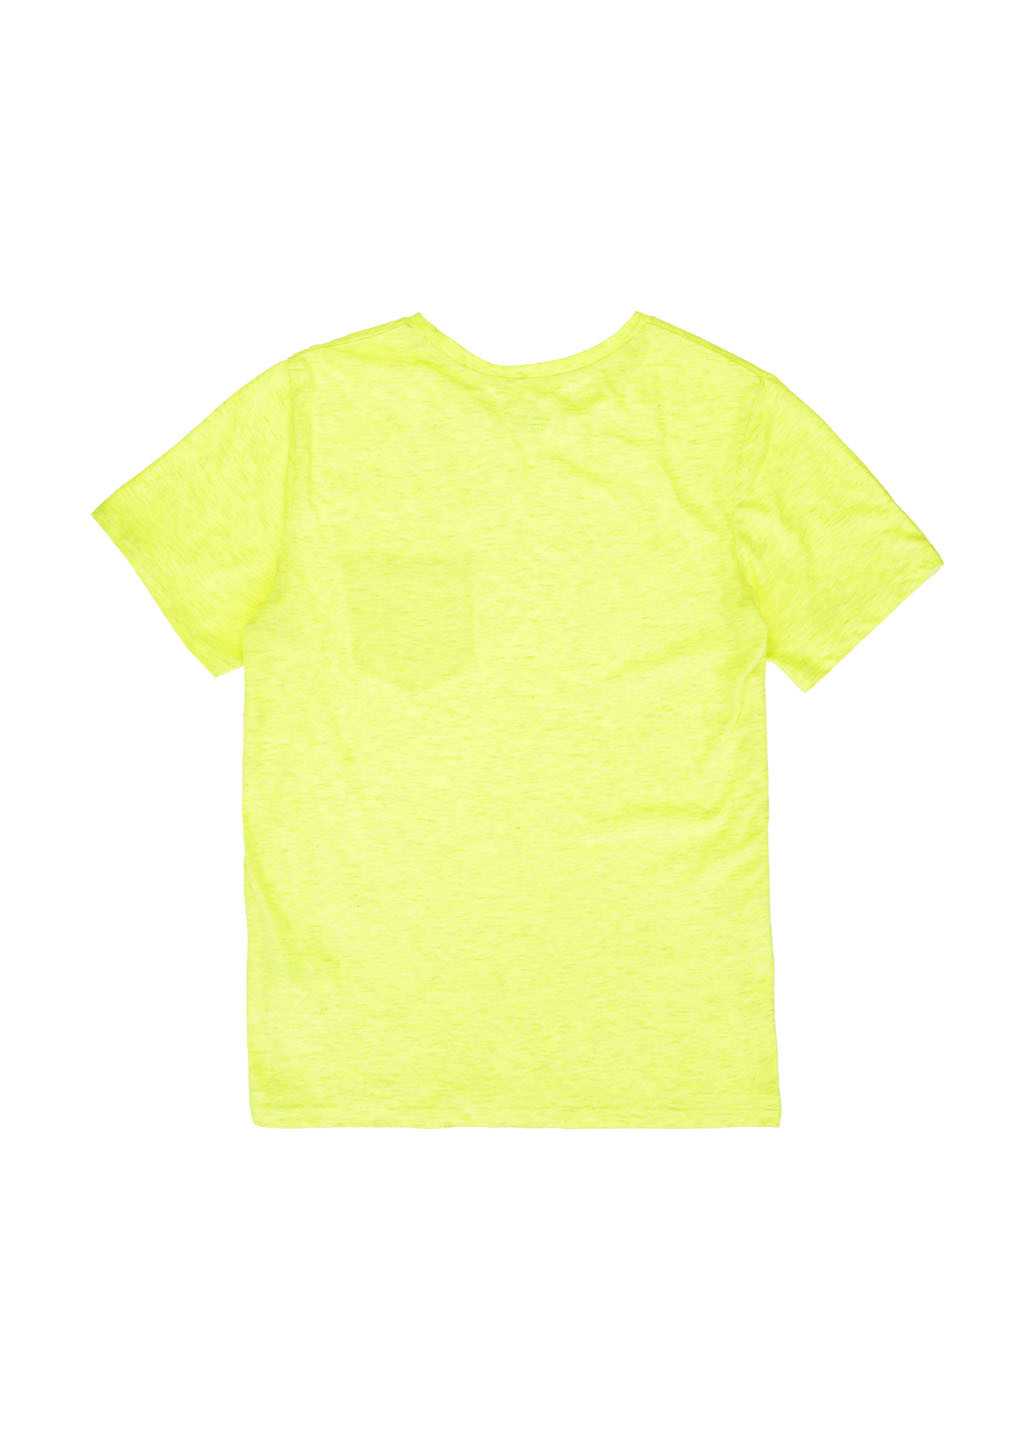 Салатовая летняя футболка с коротким рукавом H&M